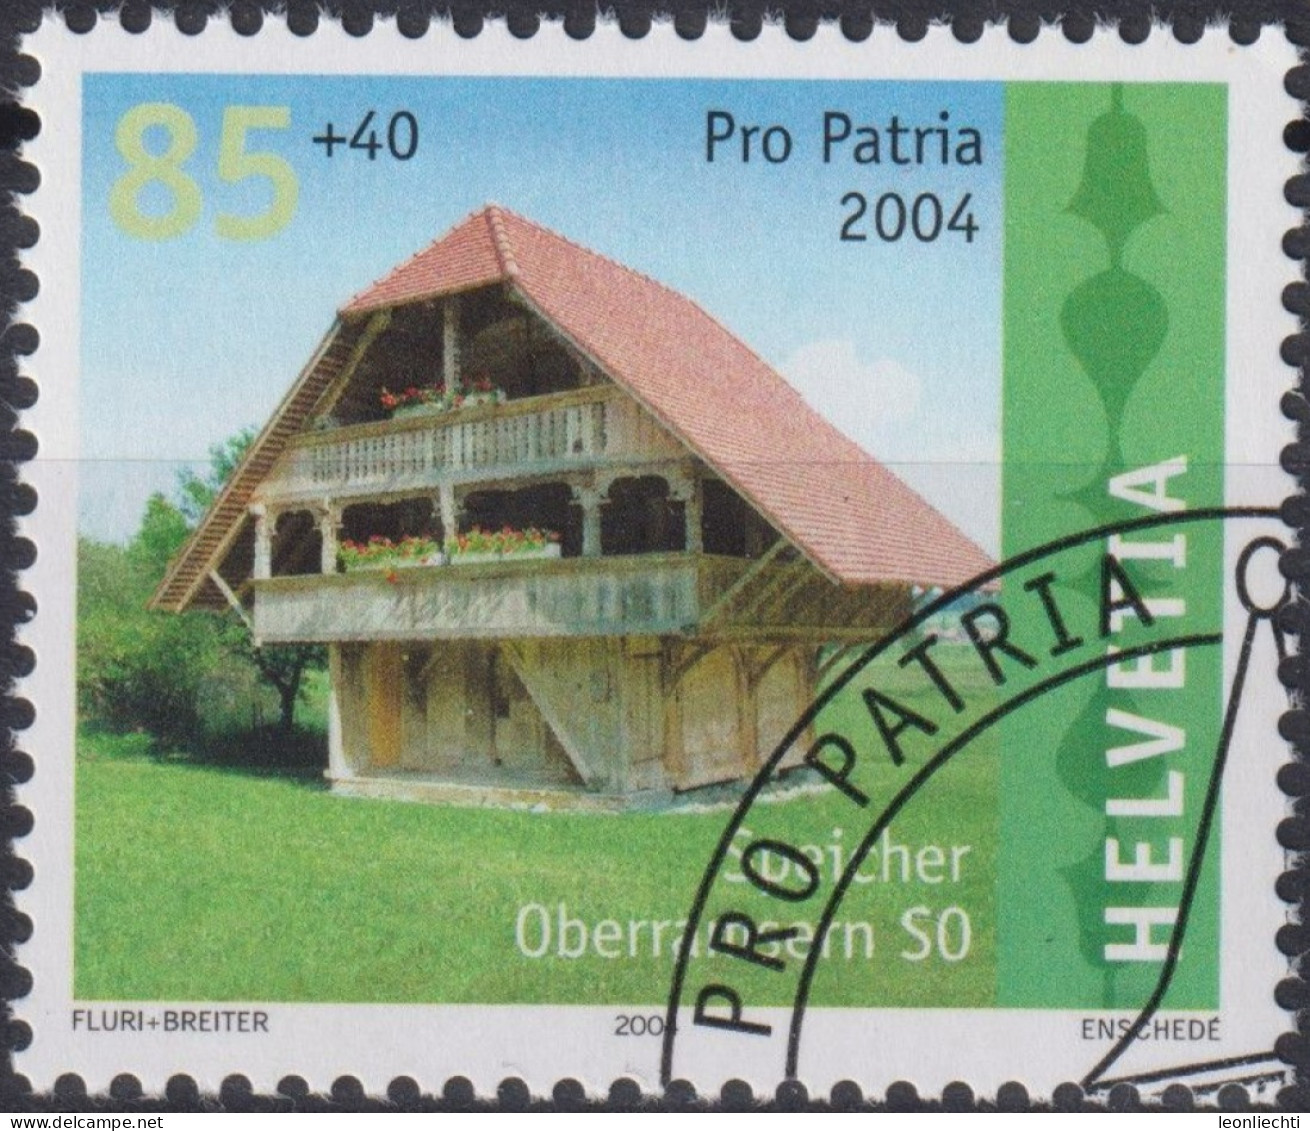 2004 Schweiz Pro Patria, Speicher, Oberramsern SO ⵙ Zum:CH B285, Mi:CH 1875, Yt:CH 1805 - Oblitérés